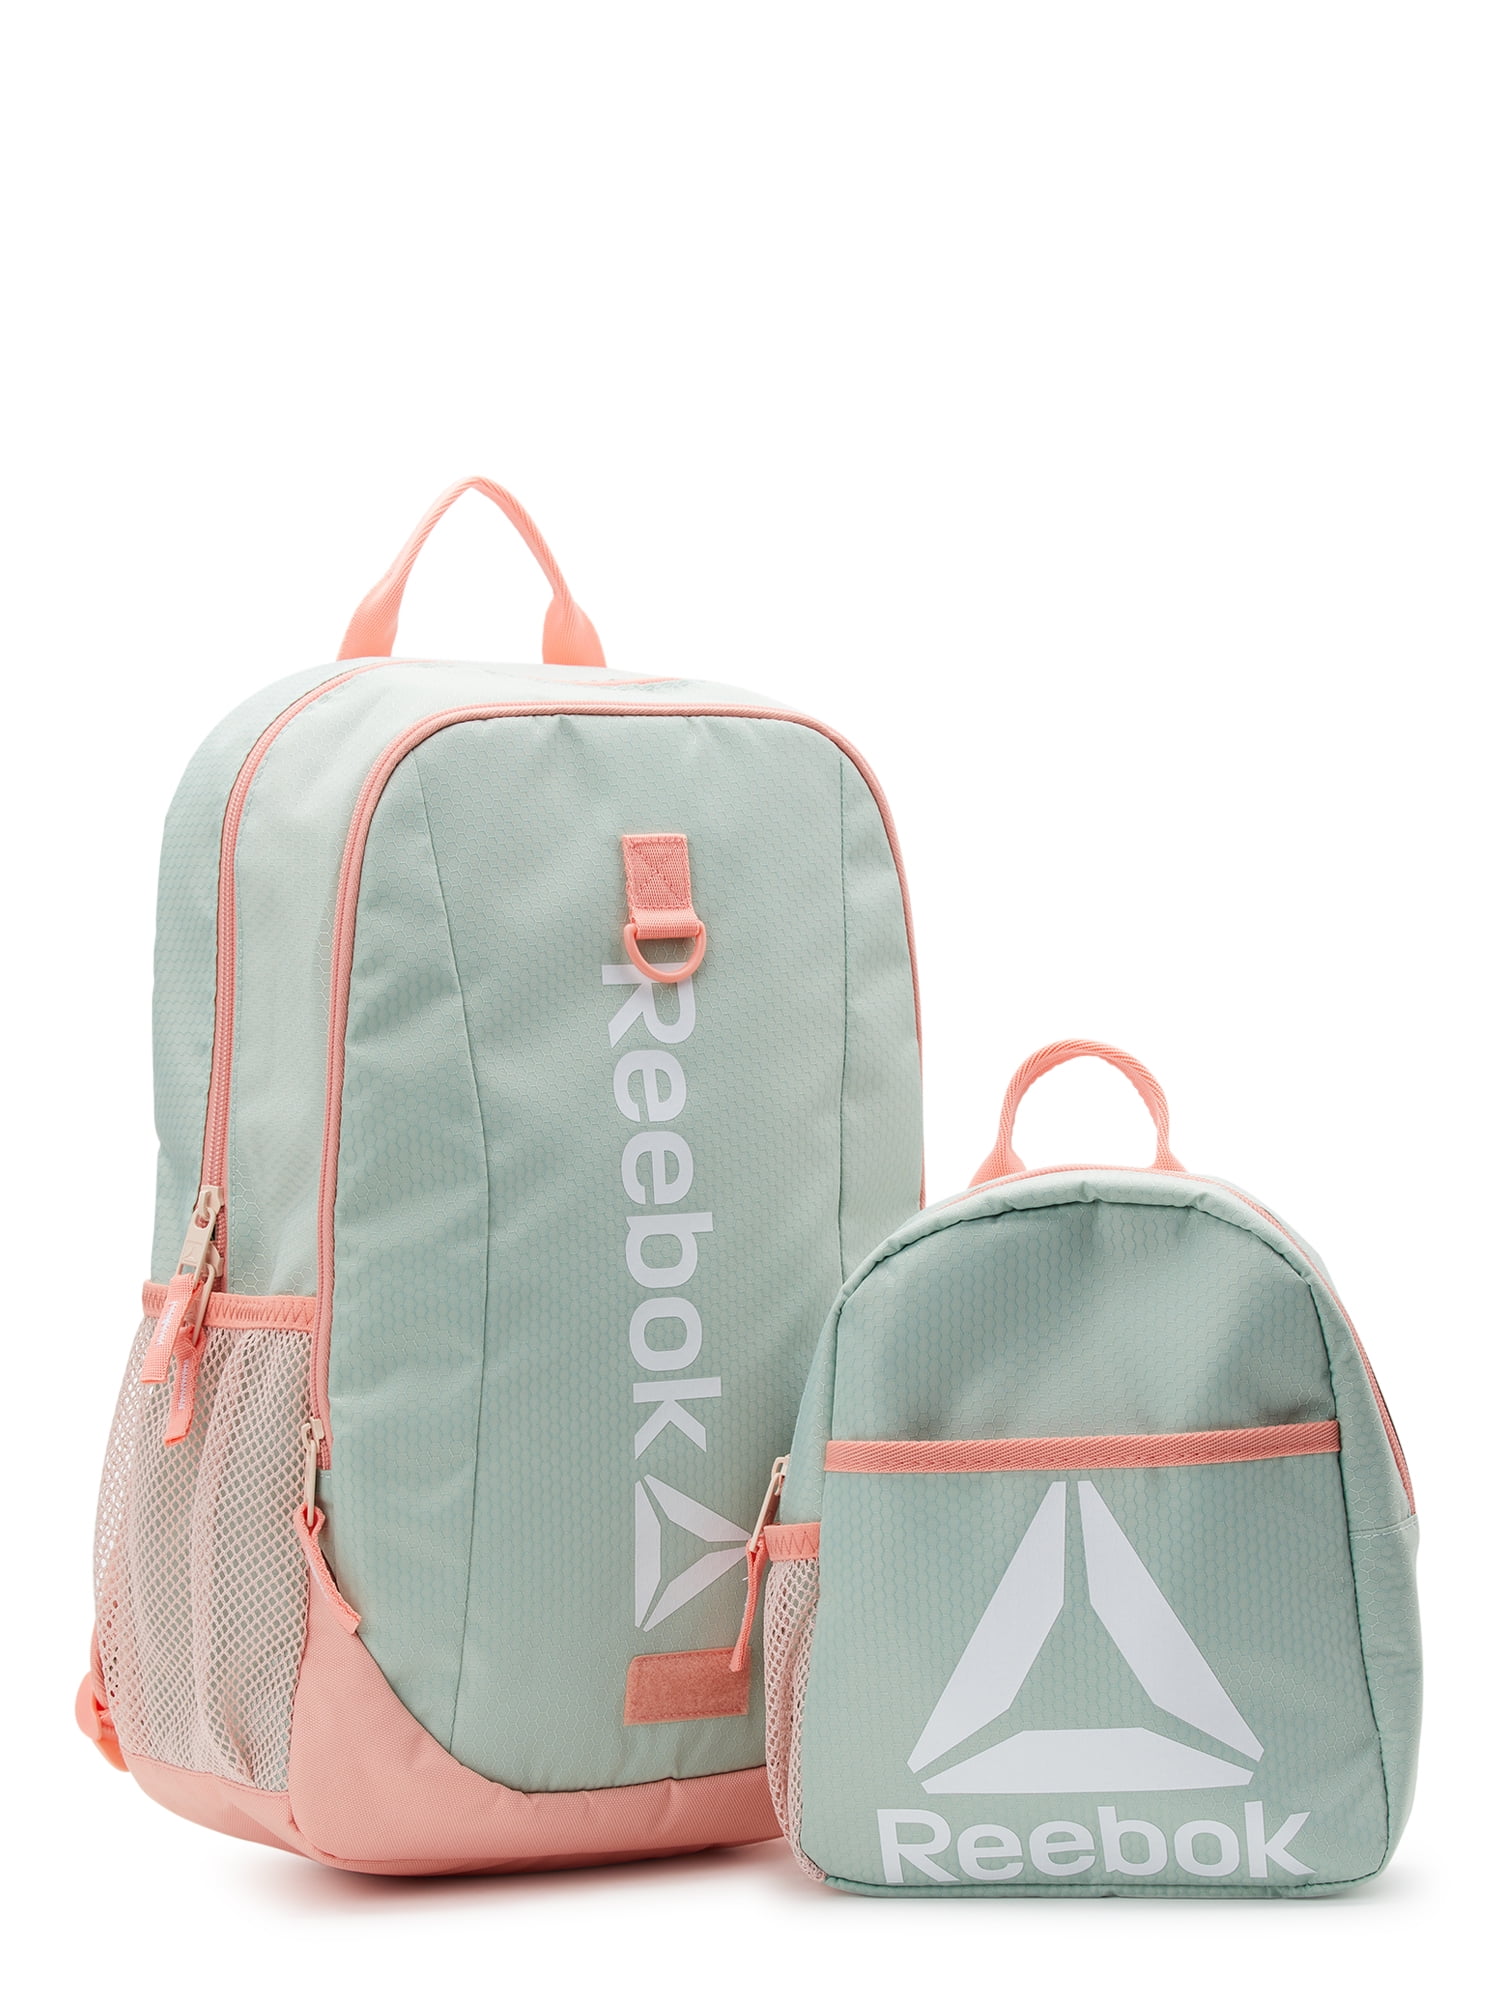 Reebok Childrens Unisex Laptop Backpack, 2-Piece Lunch Green - Walmart.com